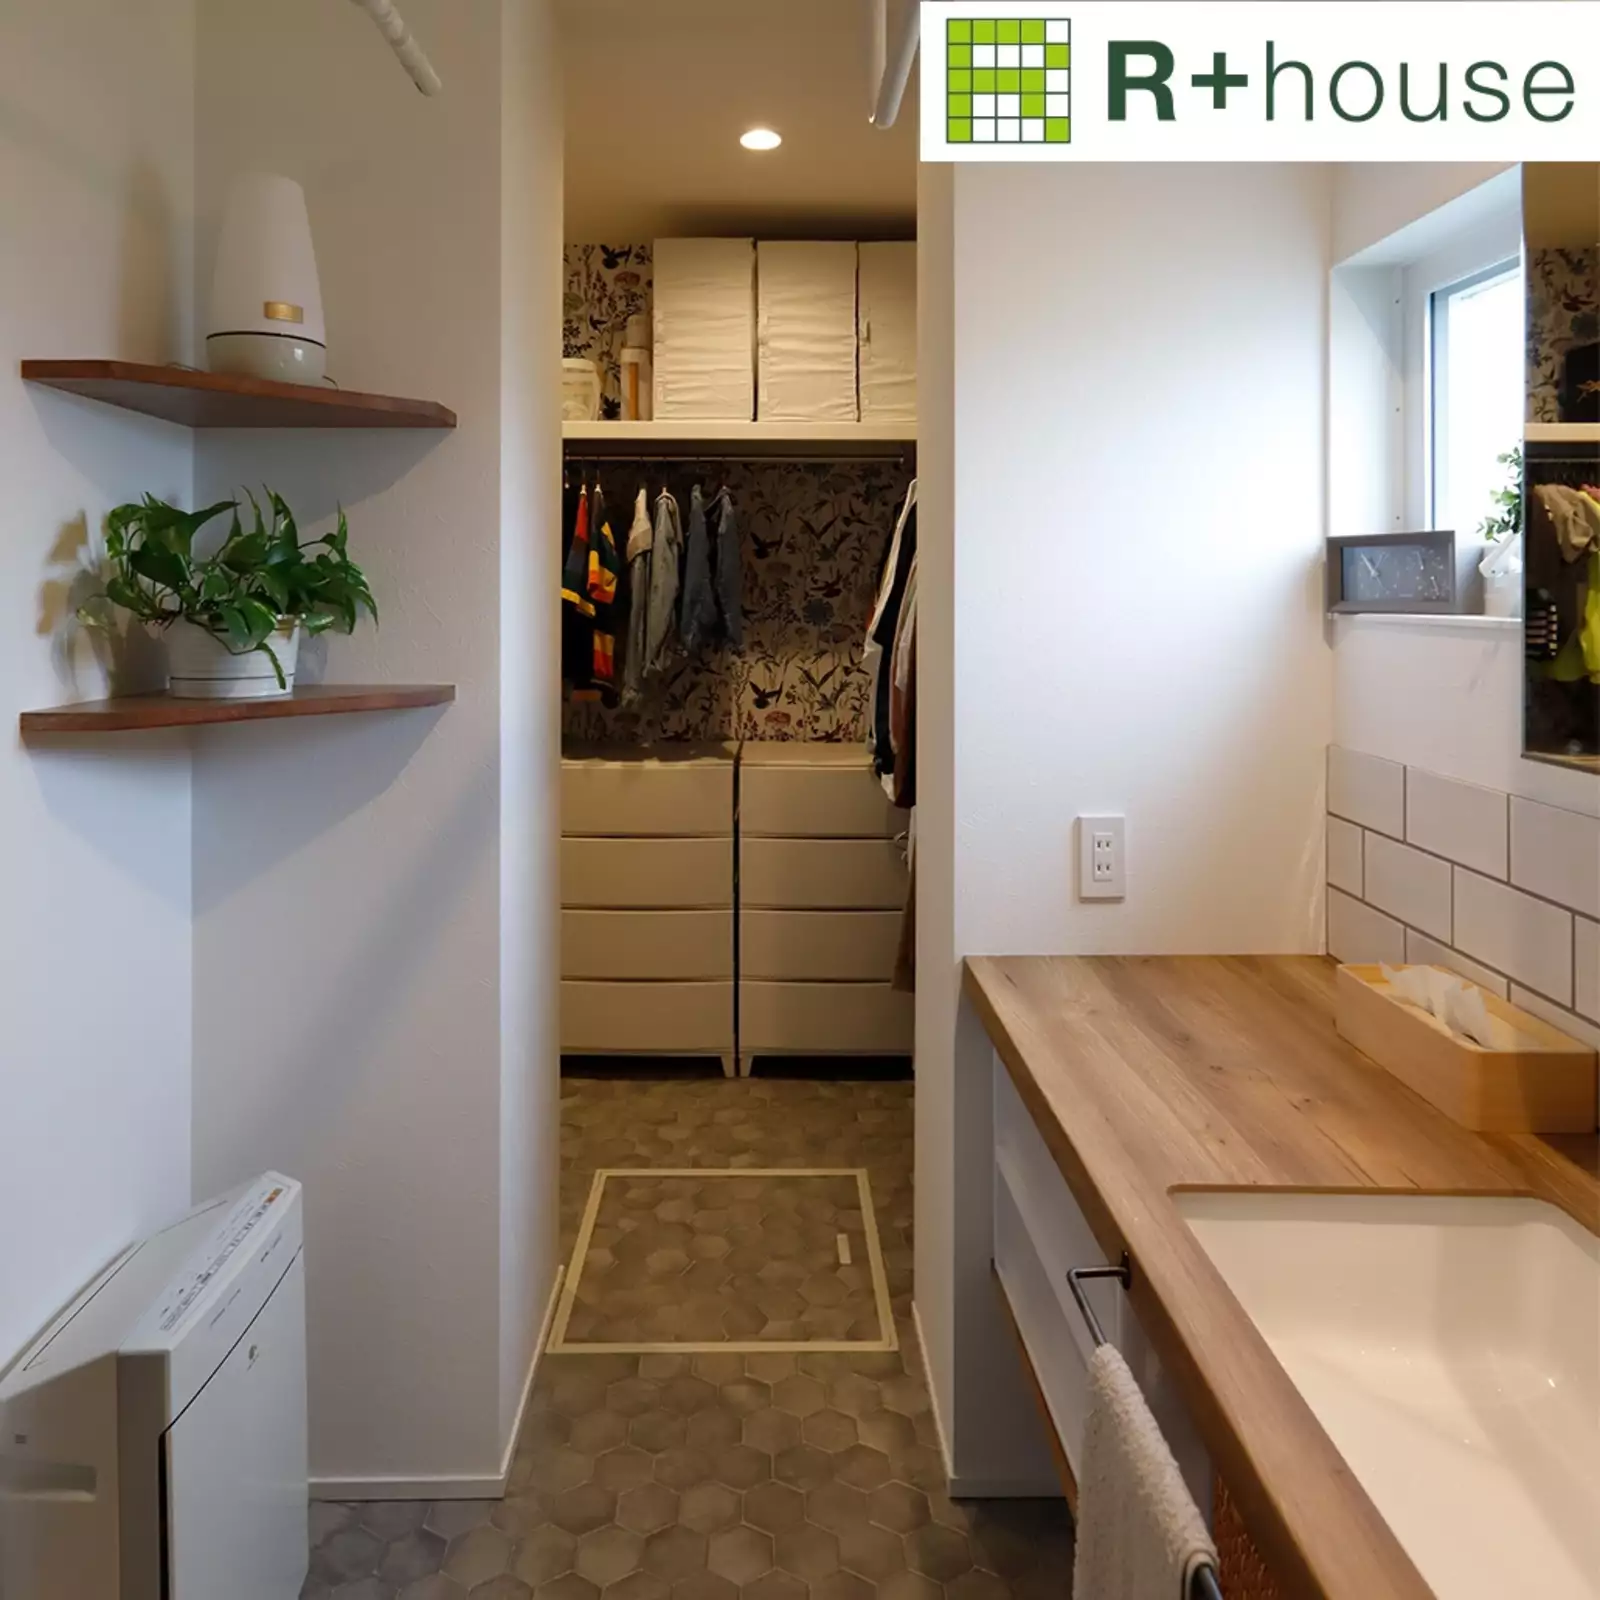 R+houseの物件の洗面所の写真です。グレーの床に白の壁、洗面コーナーの天板は木目でおしゃれ